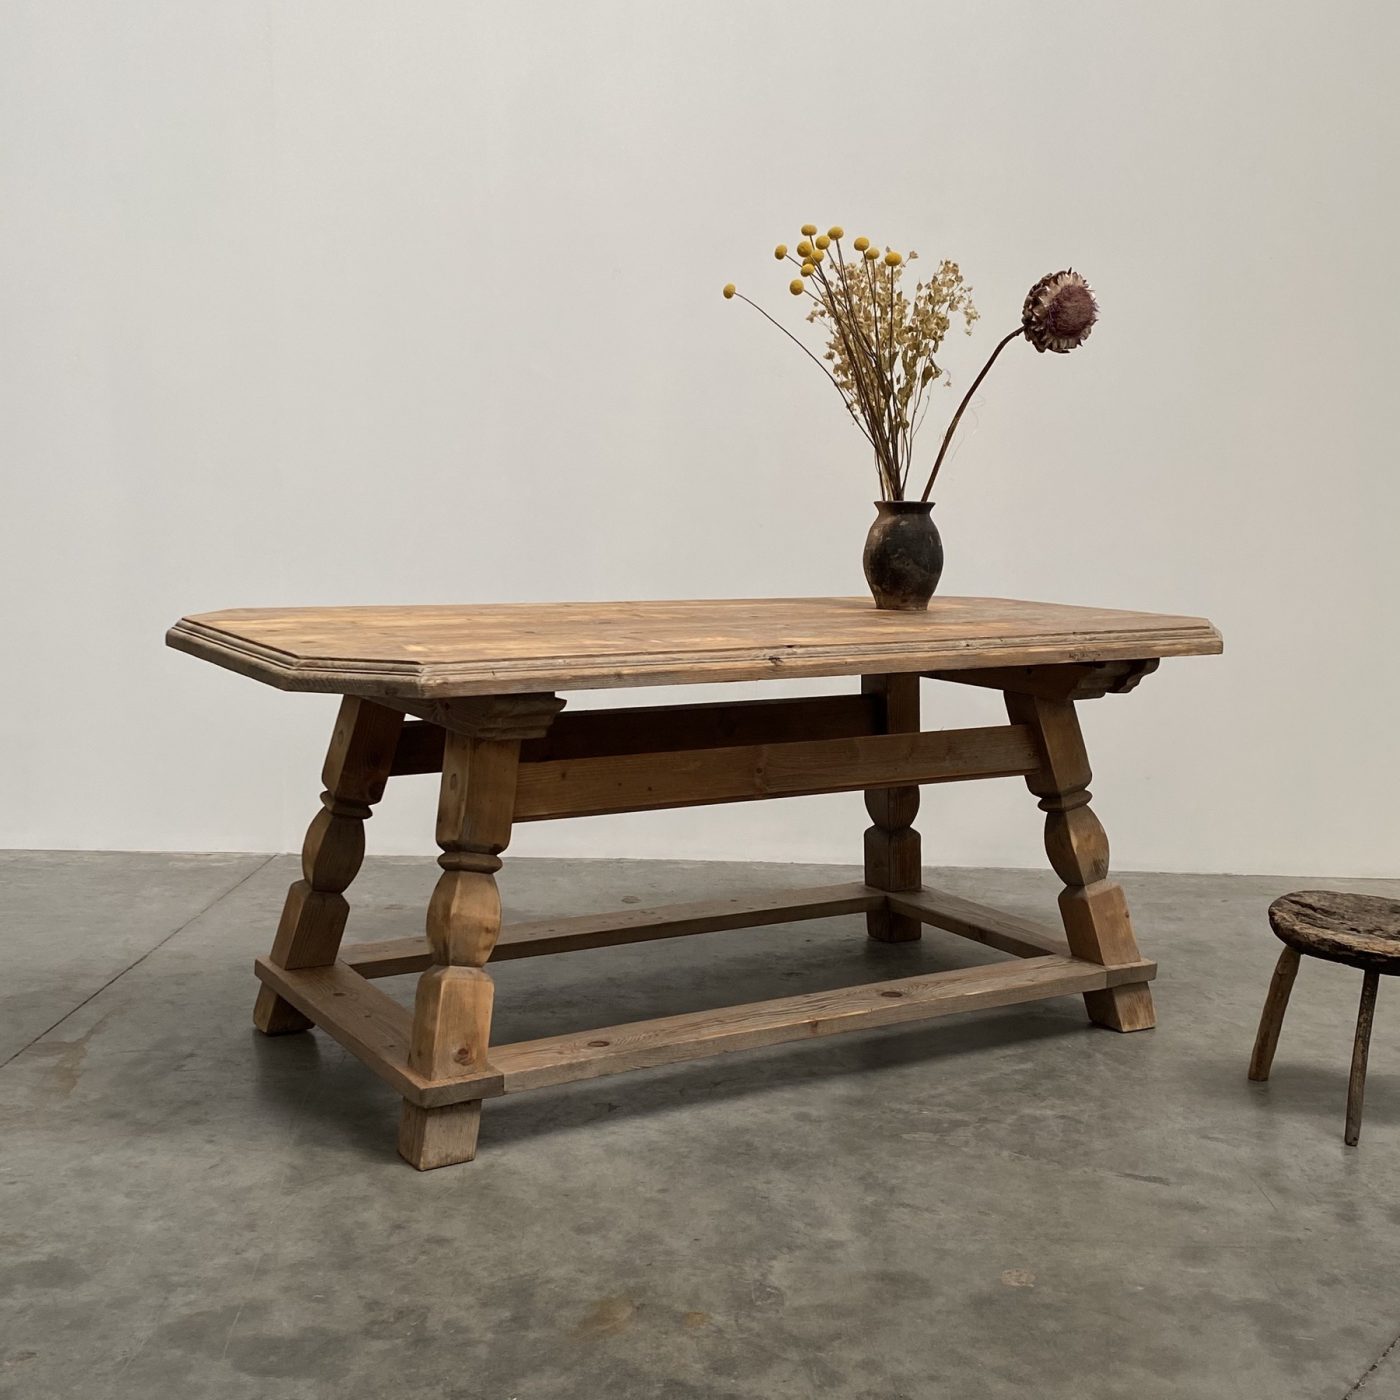 objet-vagabond-pine-table0004